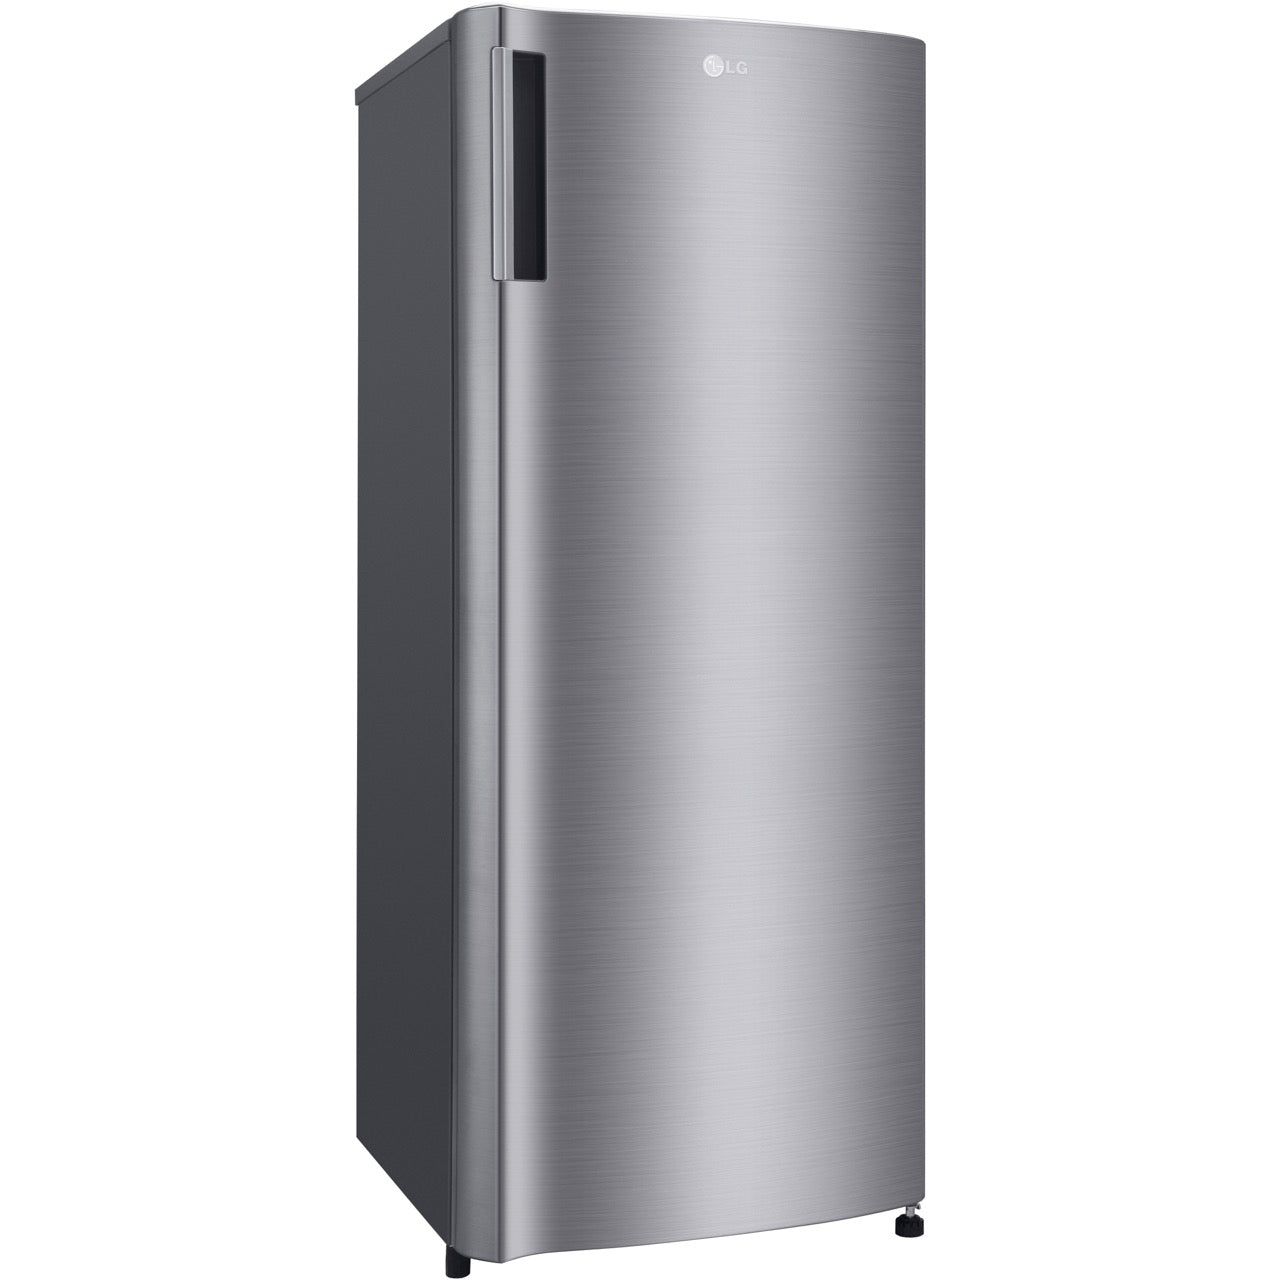 LG 5.8-Cu. Ft. Single Door Freezer, Platinum Silver (LROFC0605V)